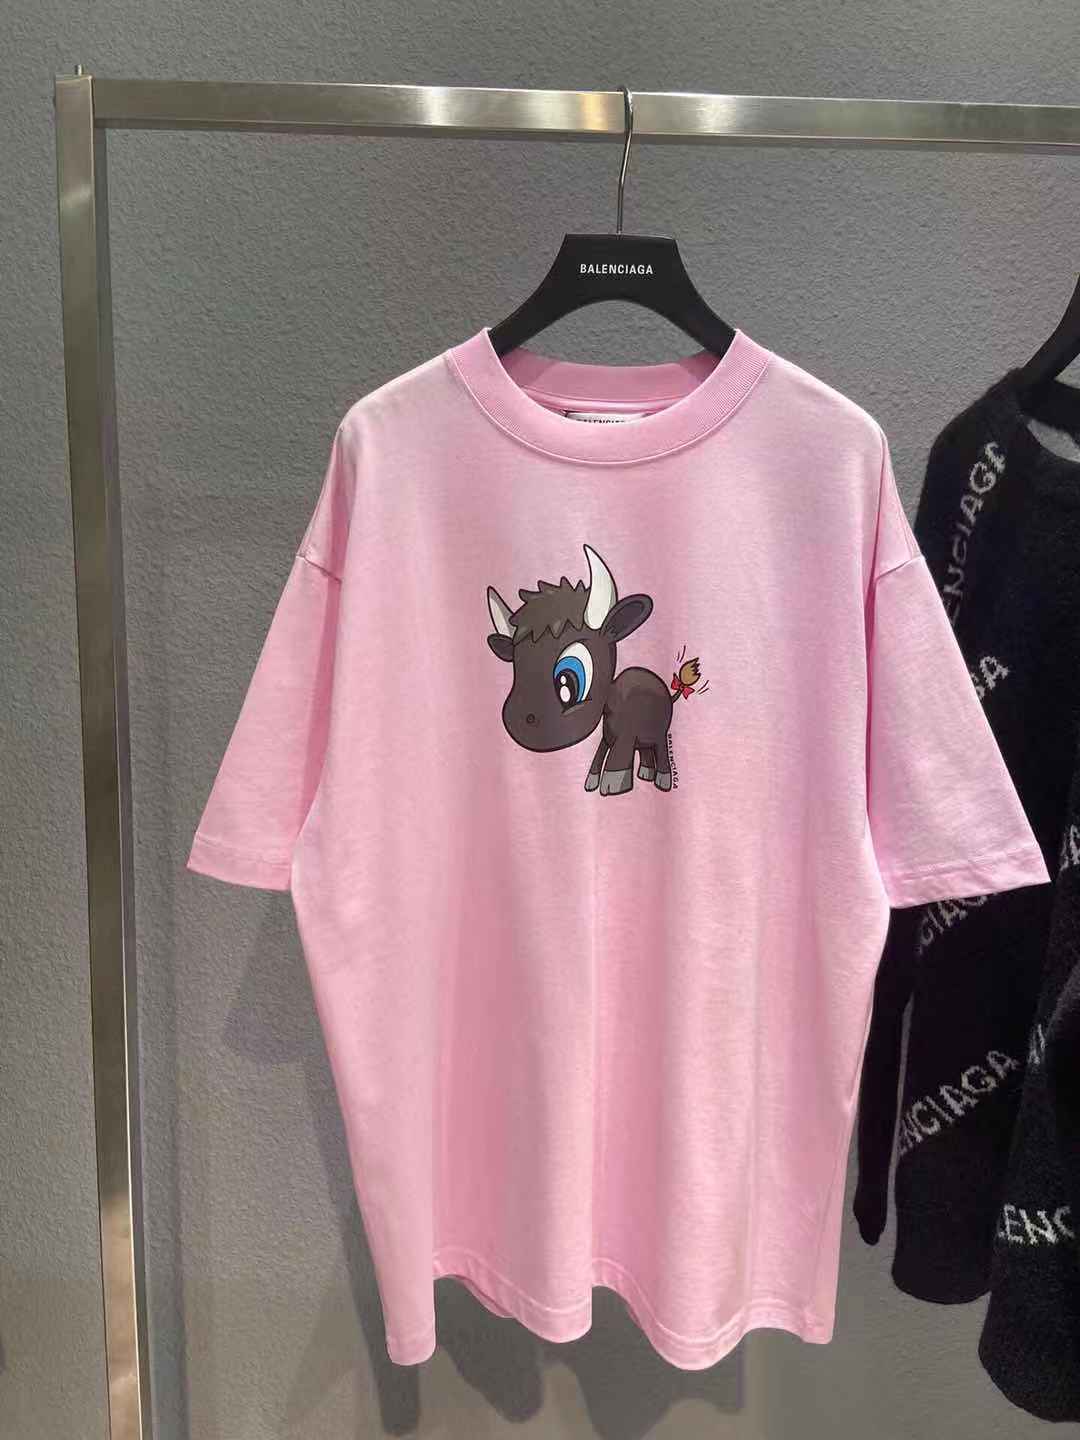 How to start selling replica
 Balenciaga Clothing T-Shirt Dark Pink Printing Cotton Short Sleeve